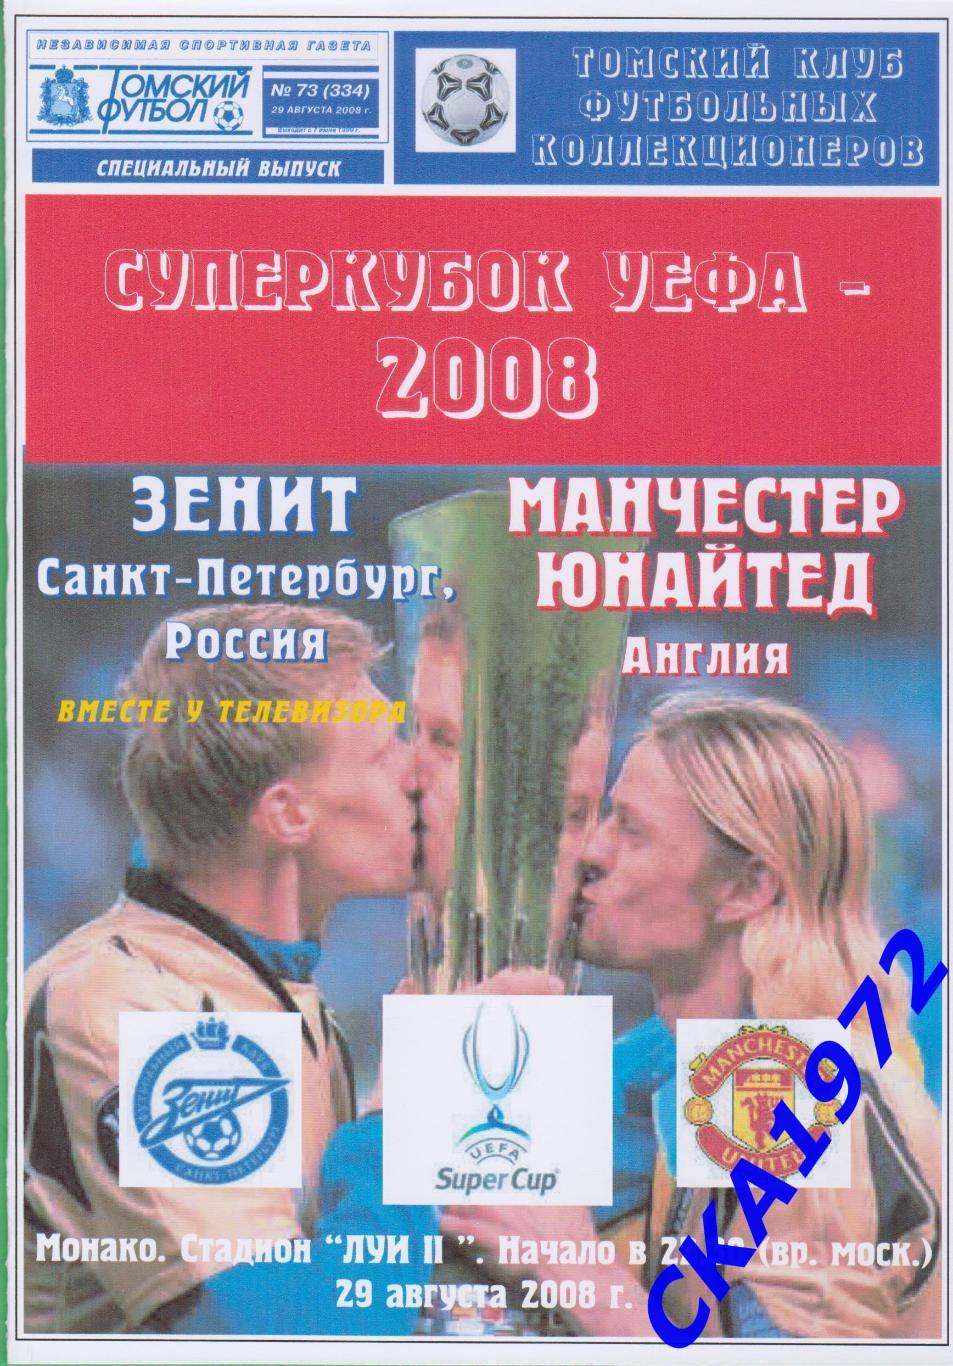 программа Зенит Санкт-Петербург - Манчестер Юнайтед Англия 2008 Суперкубок УЕФА